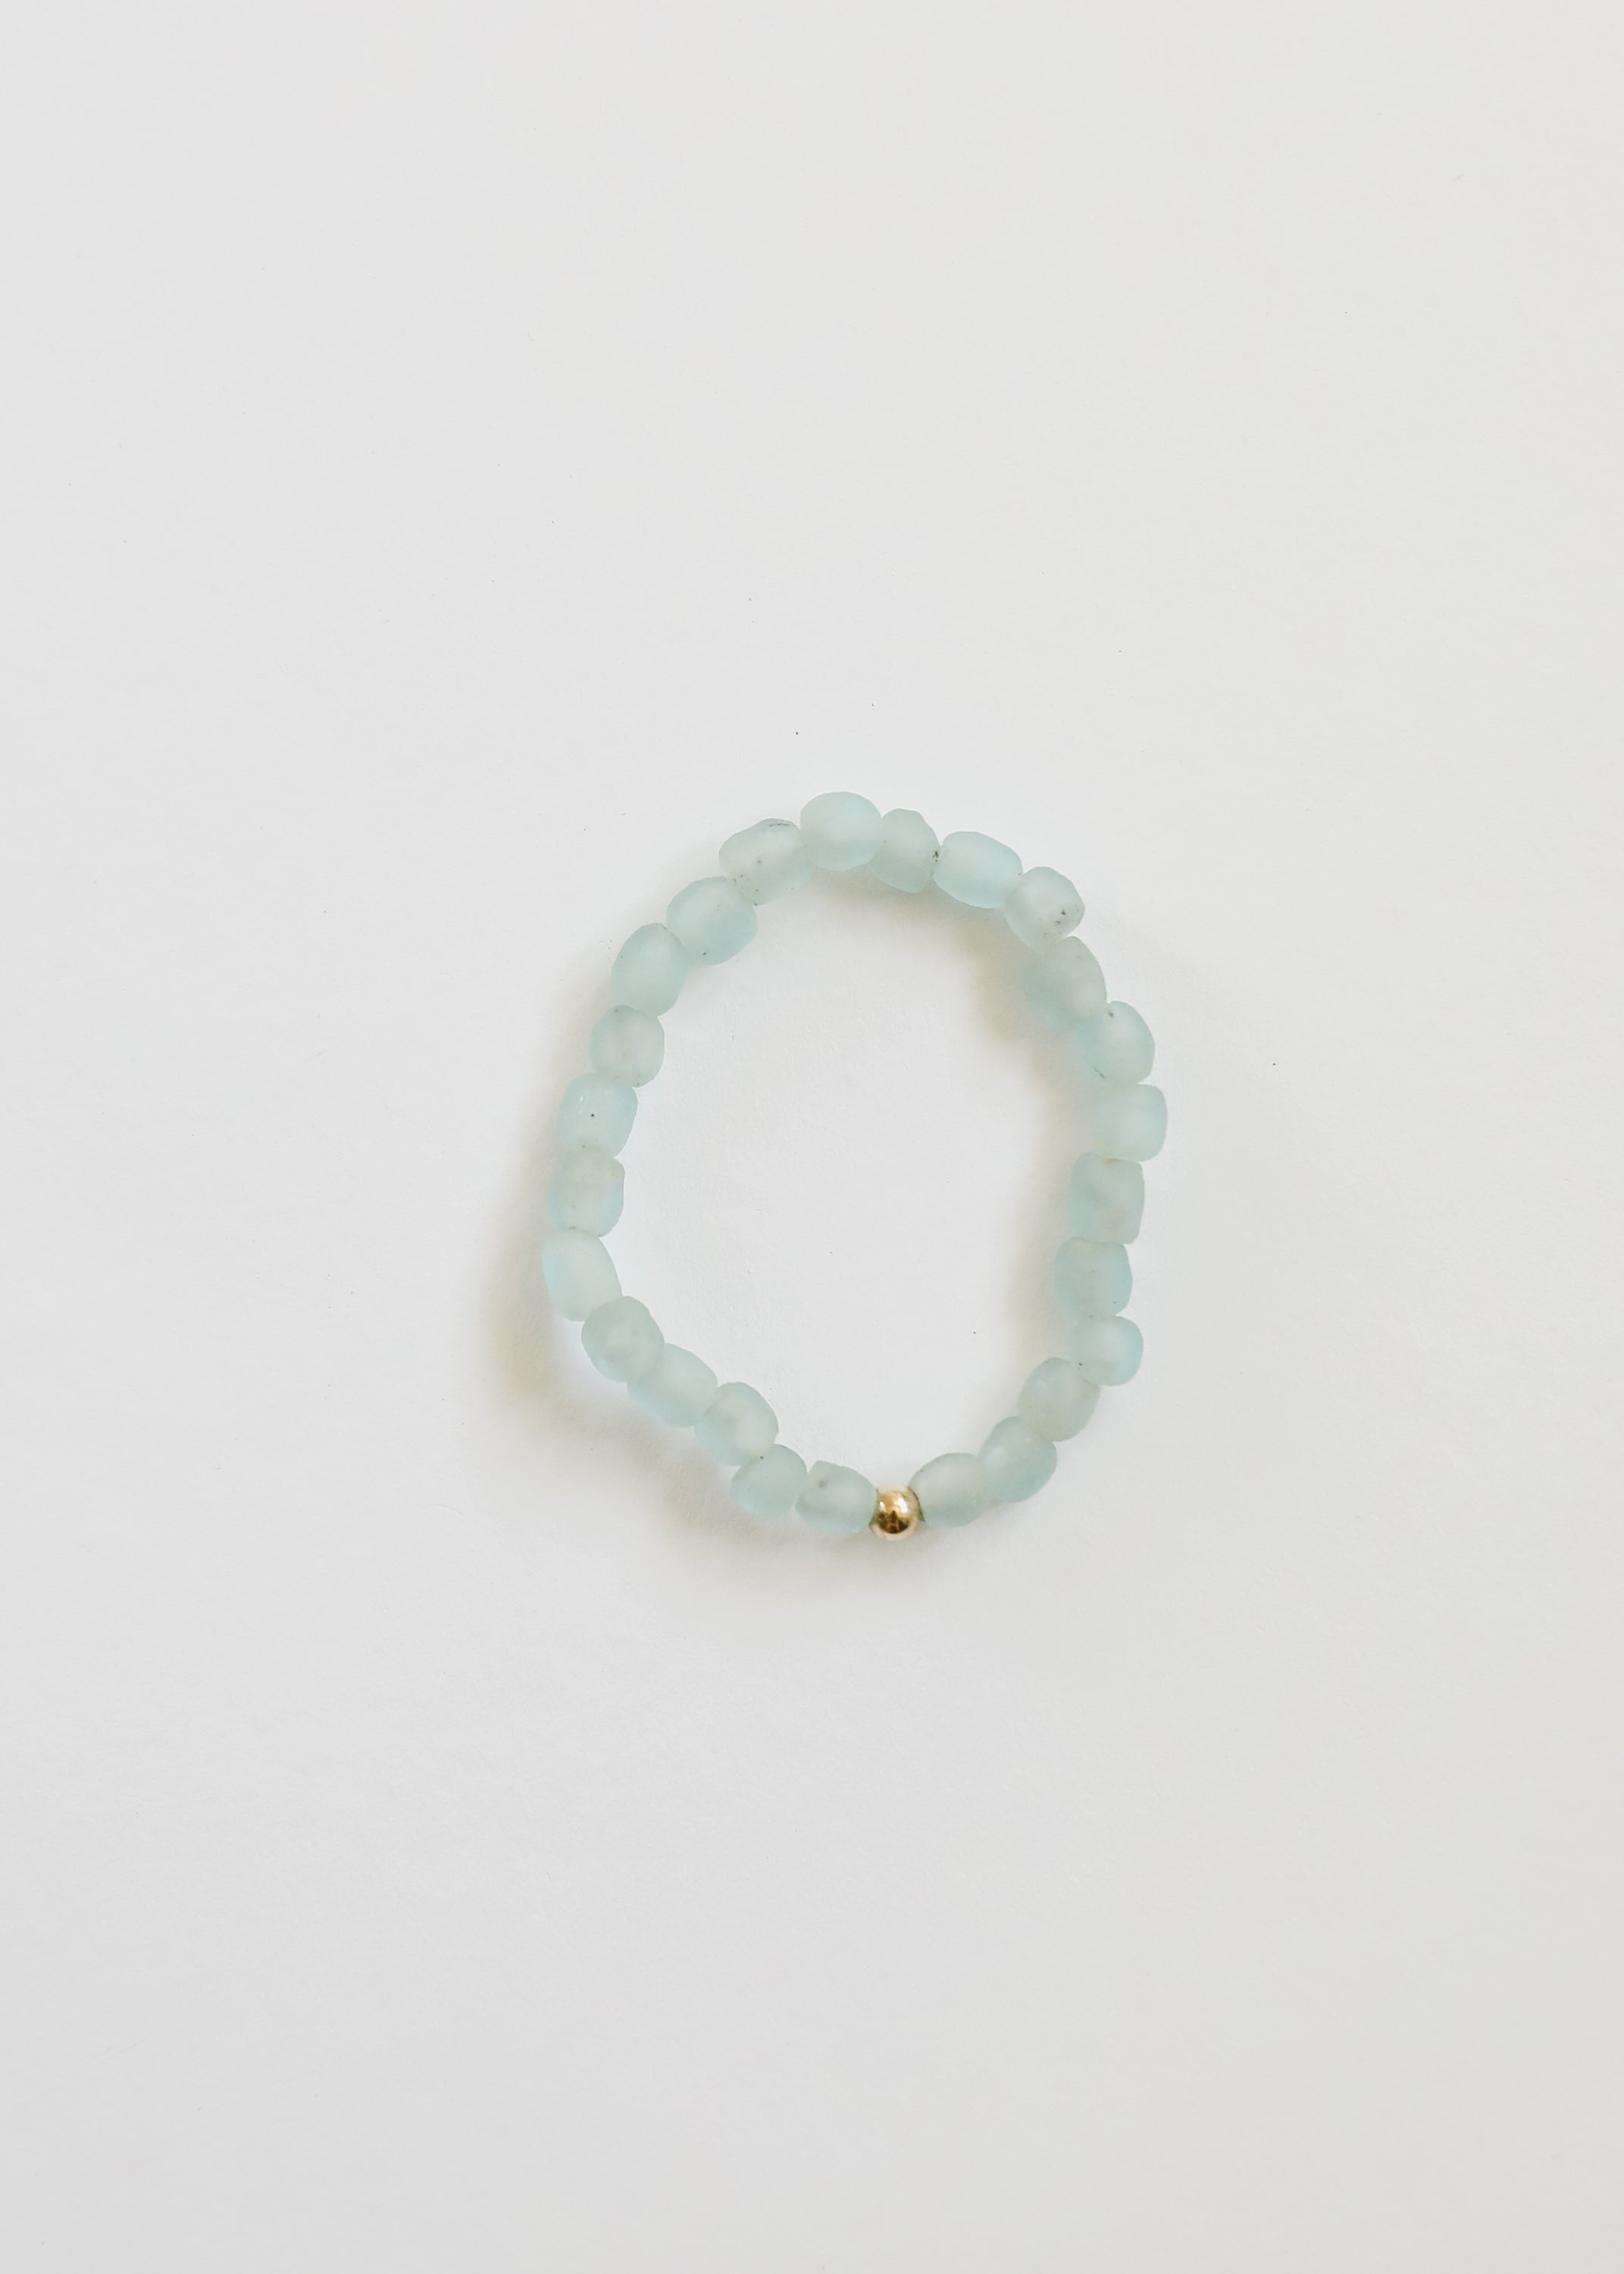 Vintage Light Blue Sea Glass || Adult Bracelet